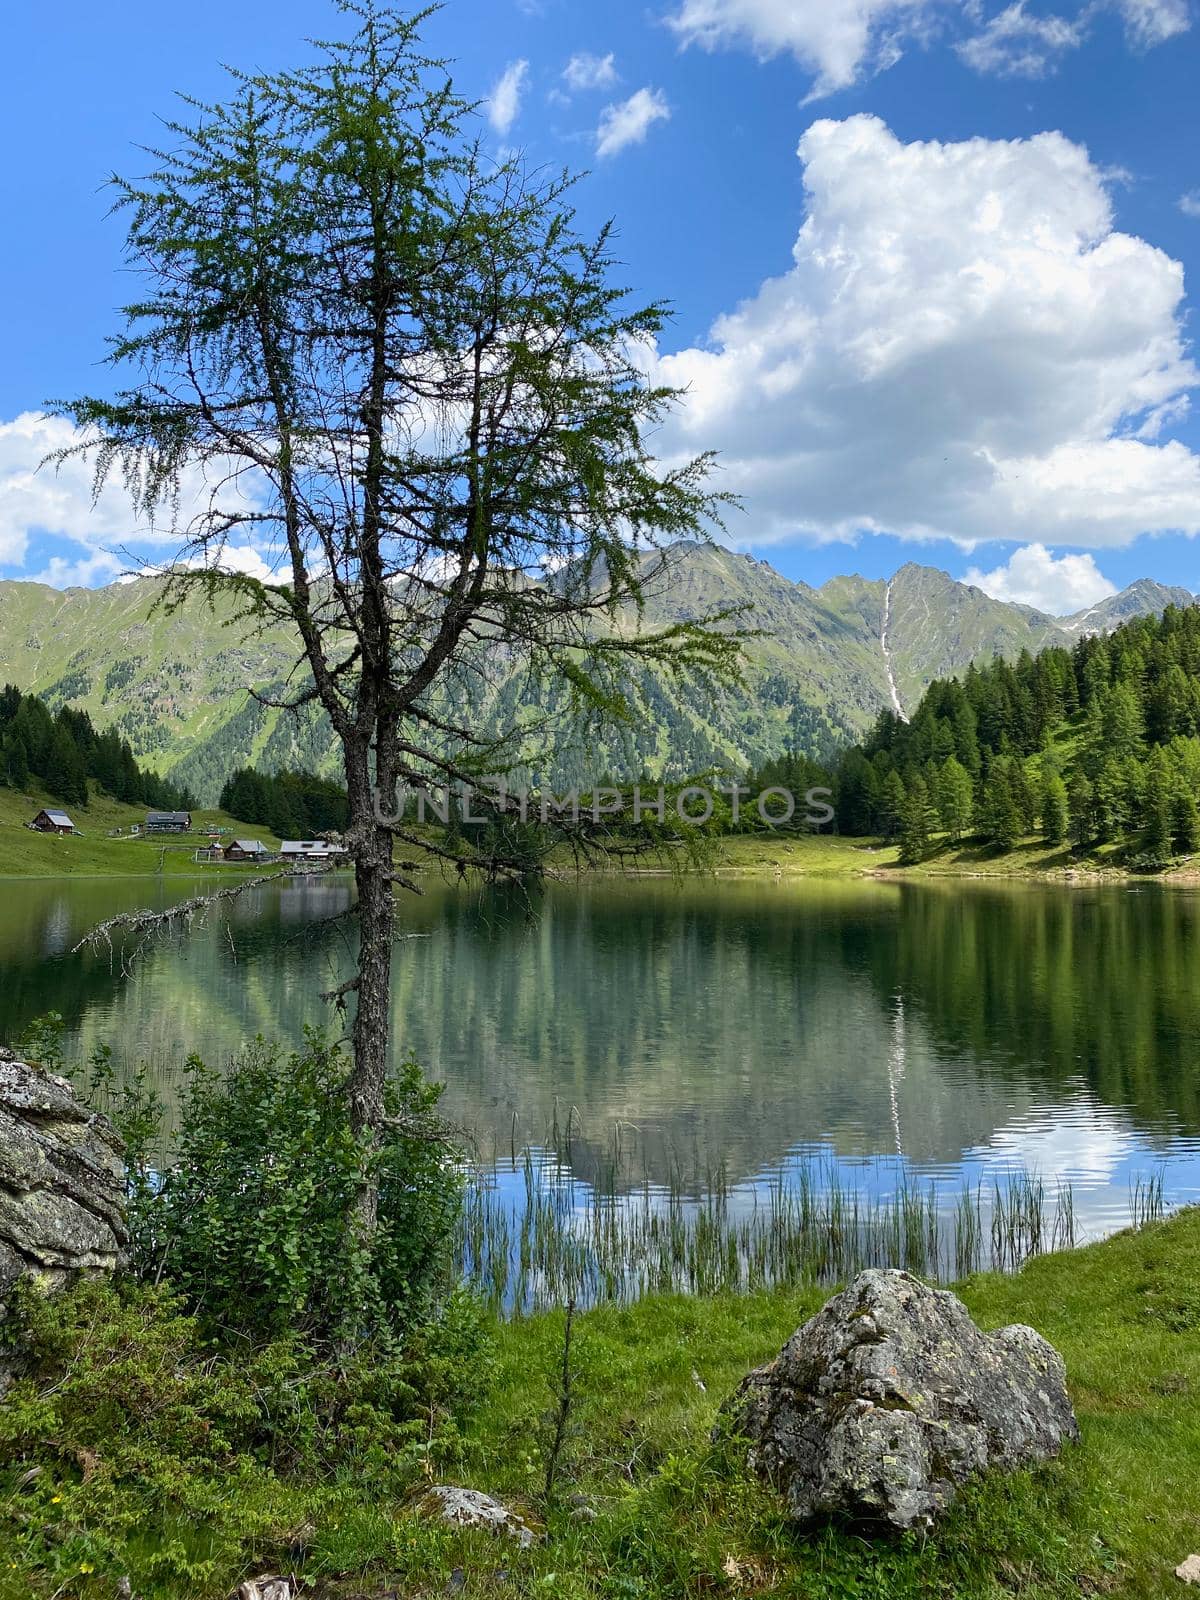 Duisitzkarsee Lake in Austria. by CaptureLight